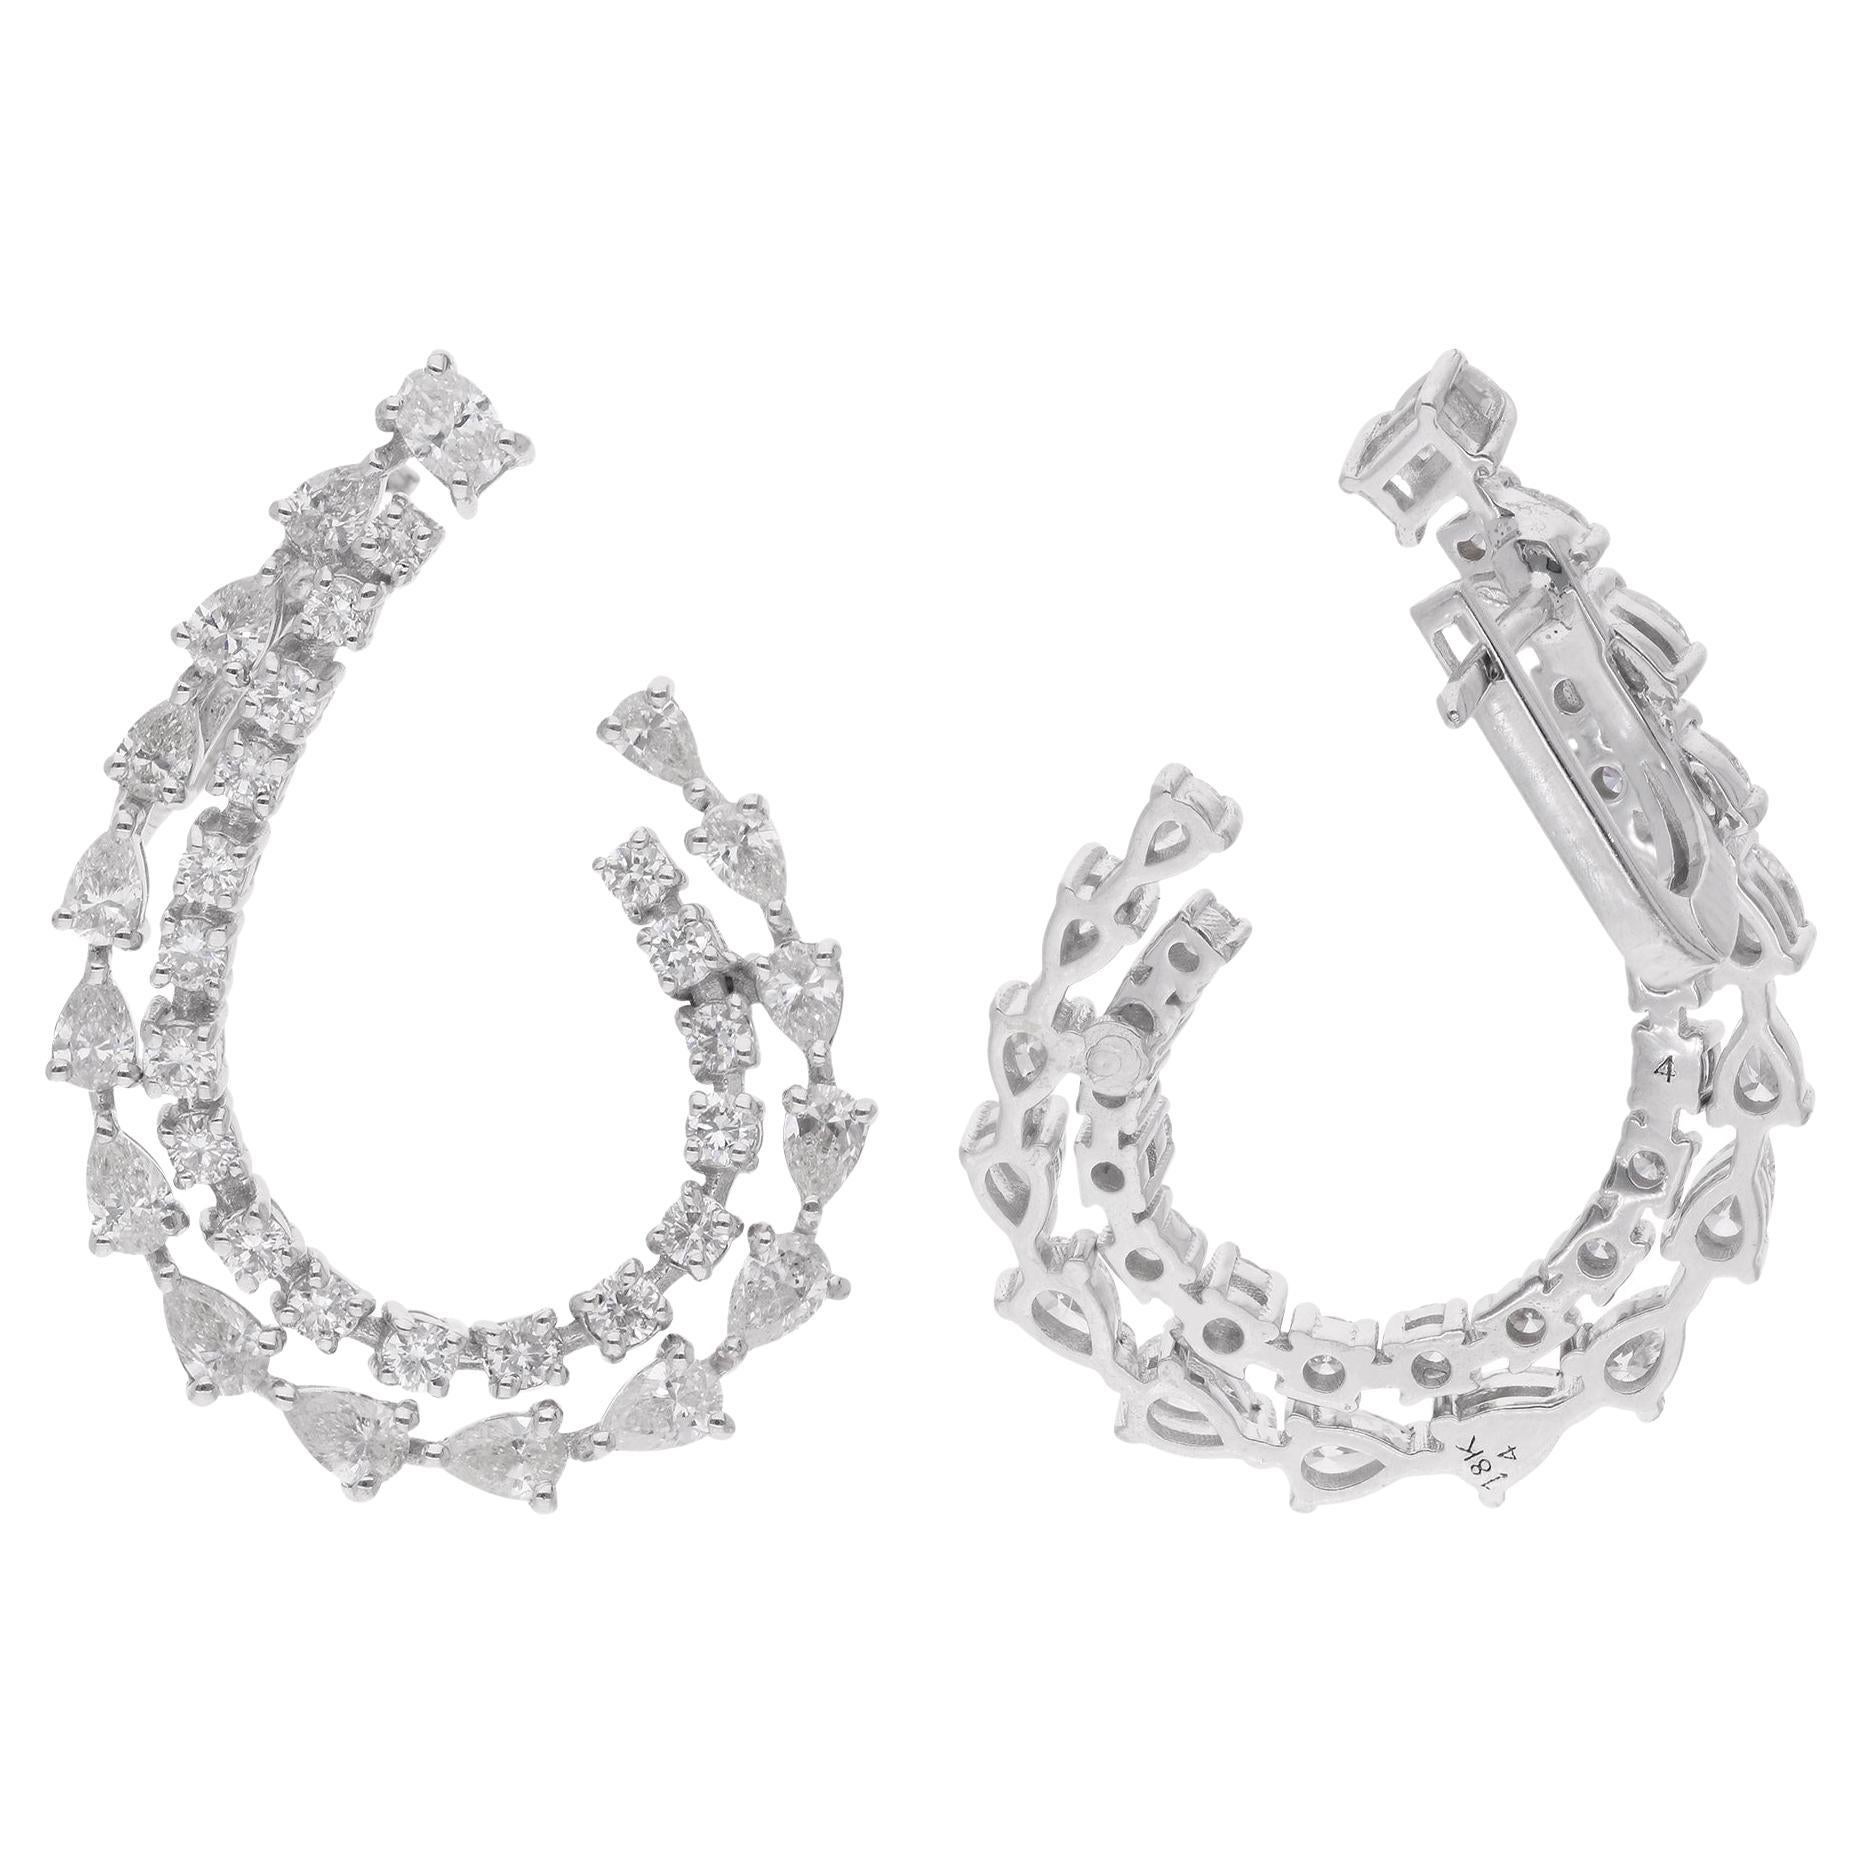 2.92 Carat Pear & Round Diamond Earrings 14 Karat White Gold Handmade Jewelry For Sale